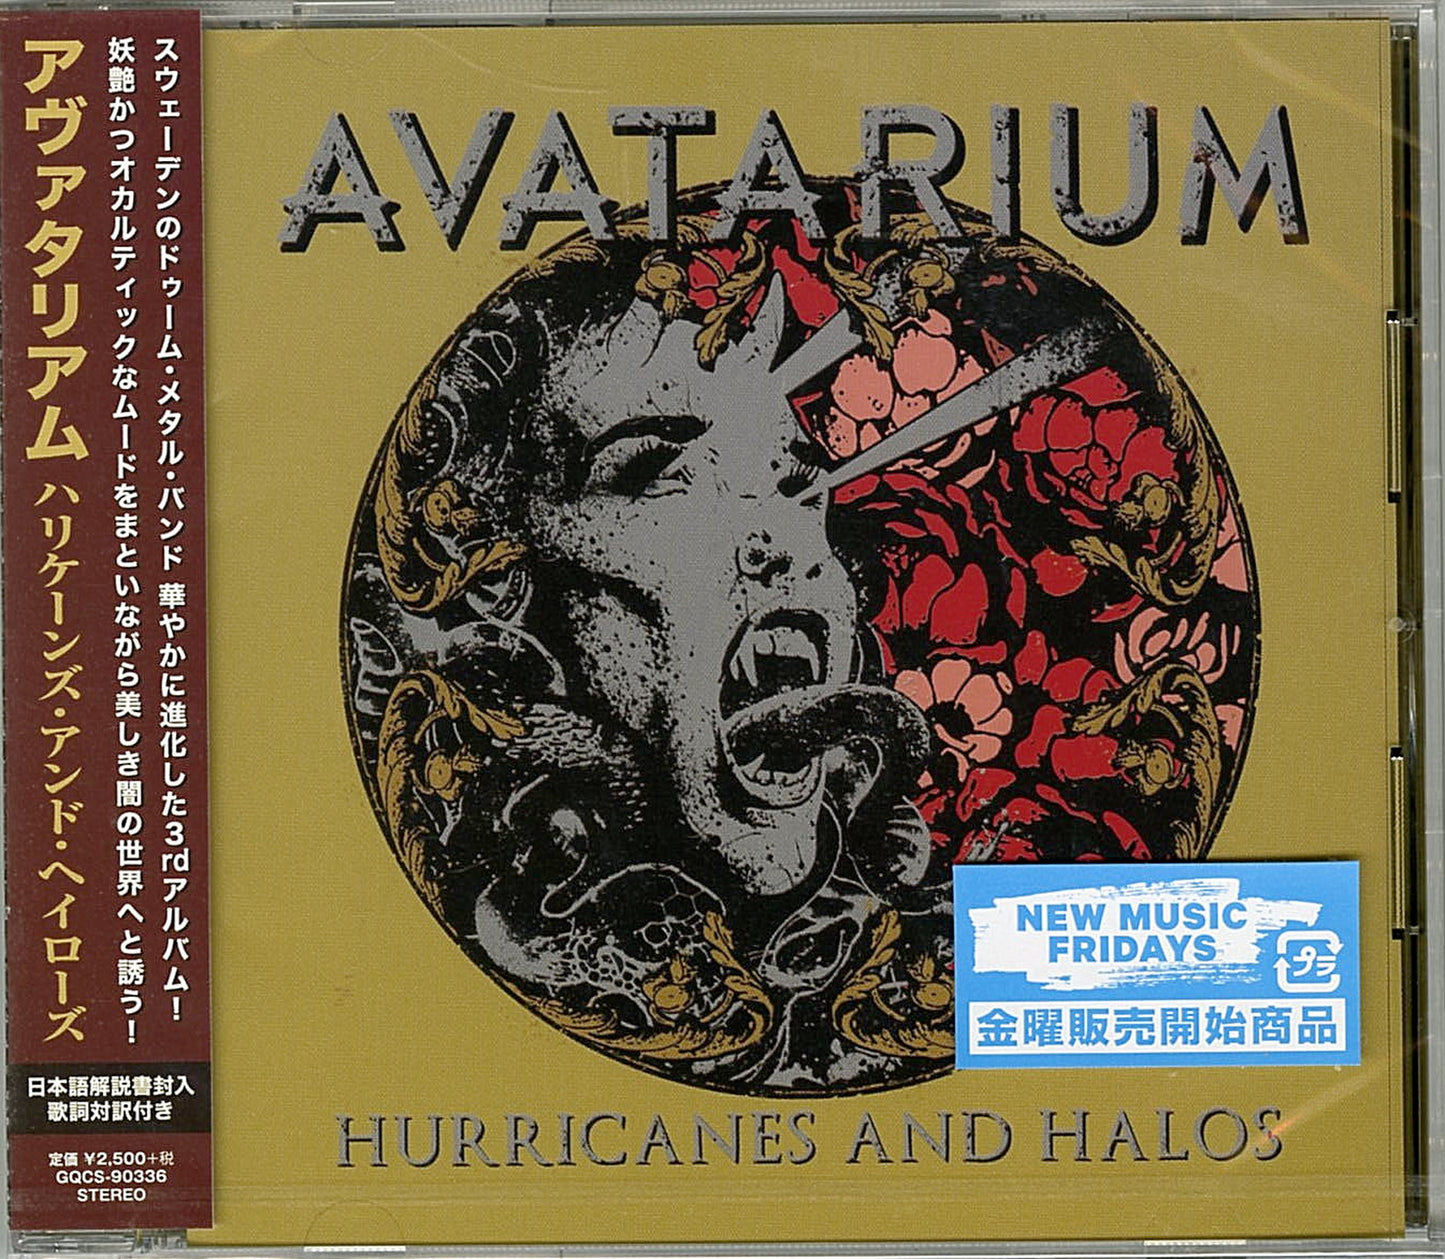 Avatarium - Hurricanes And Halos - Japan CD